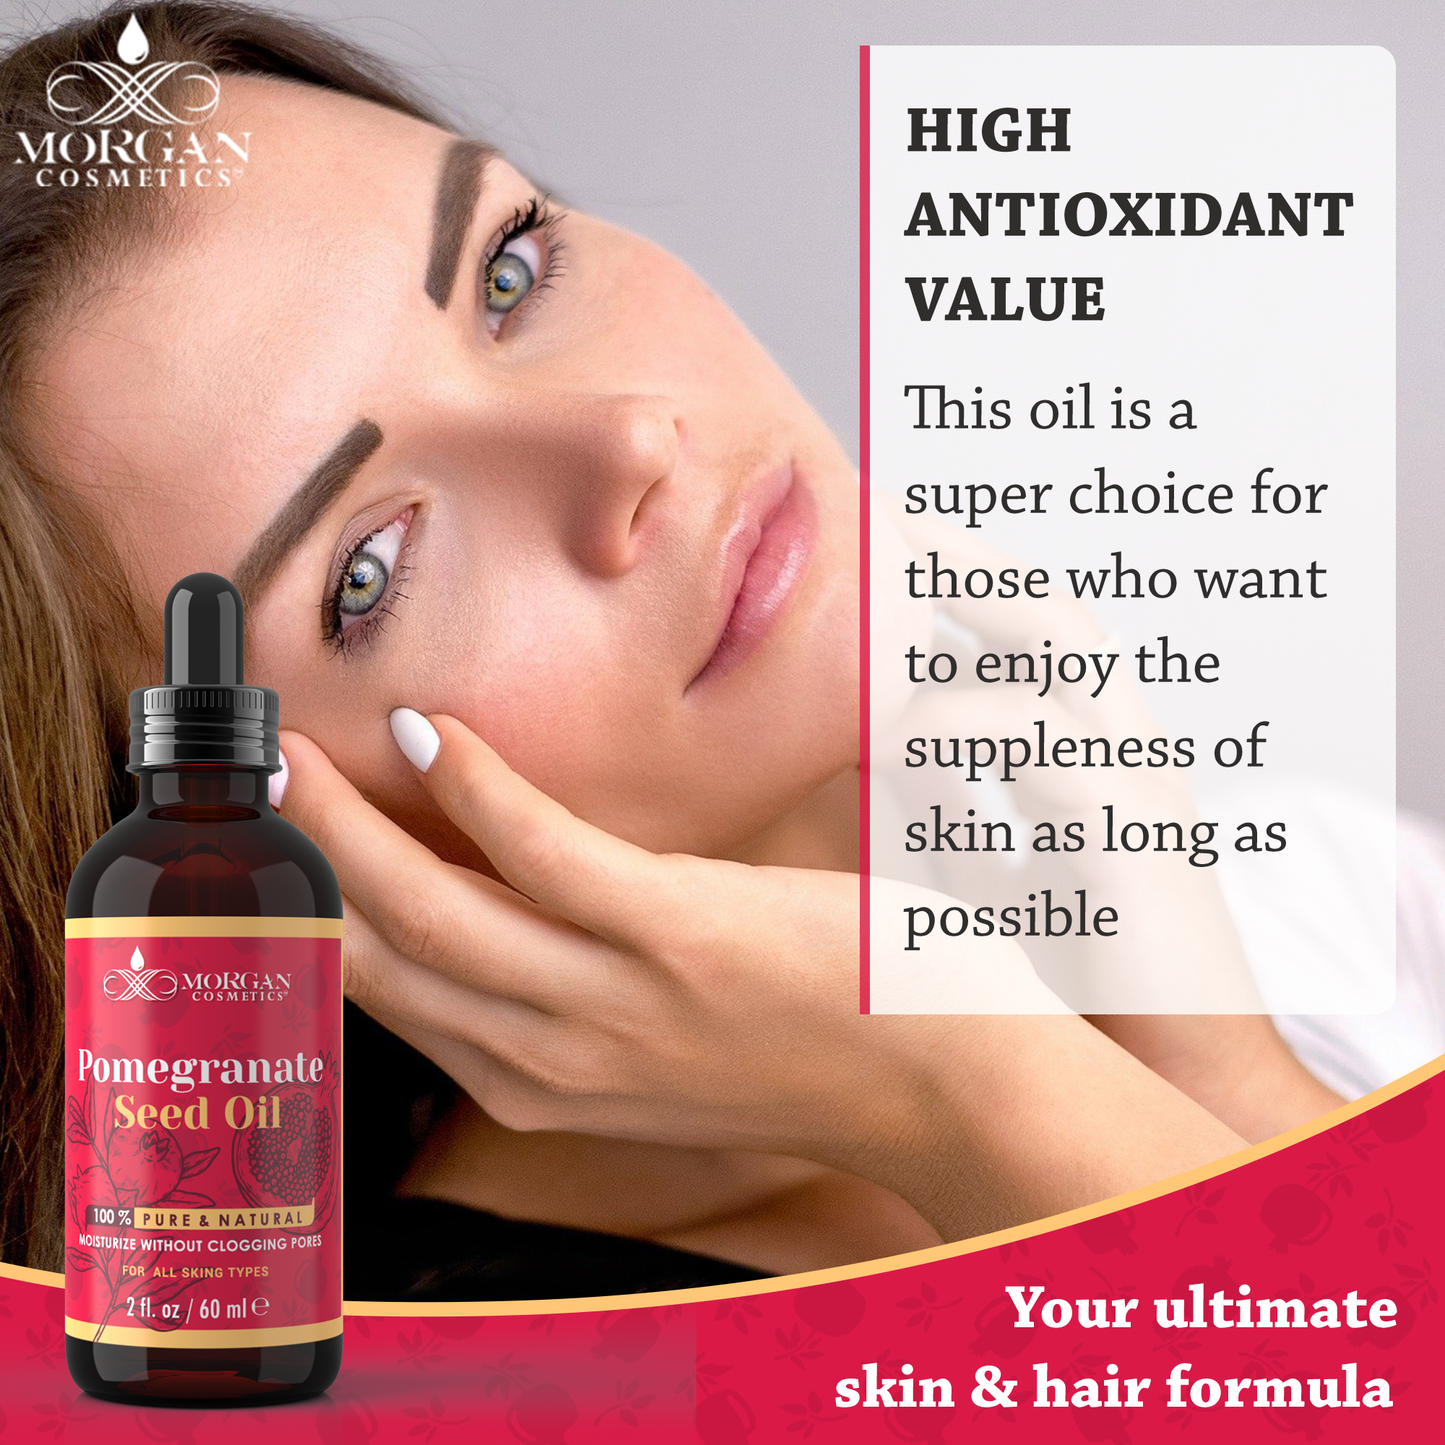 100% Pure Pomegranate Oil 2 oz freeshipping - morgancosmeticsofficial